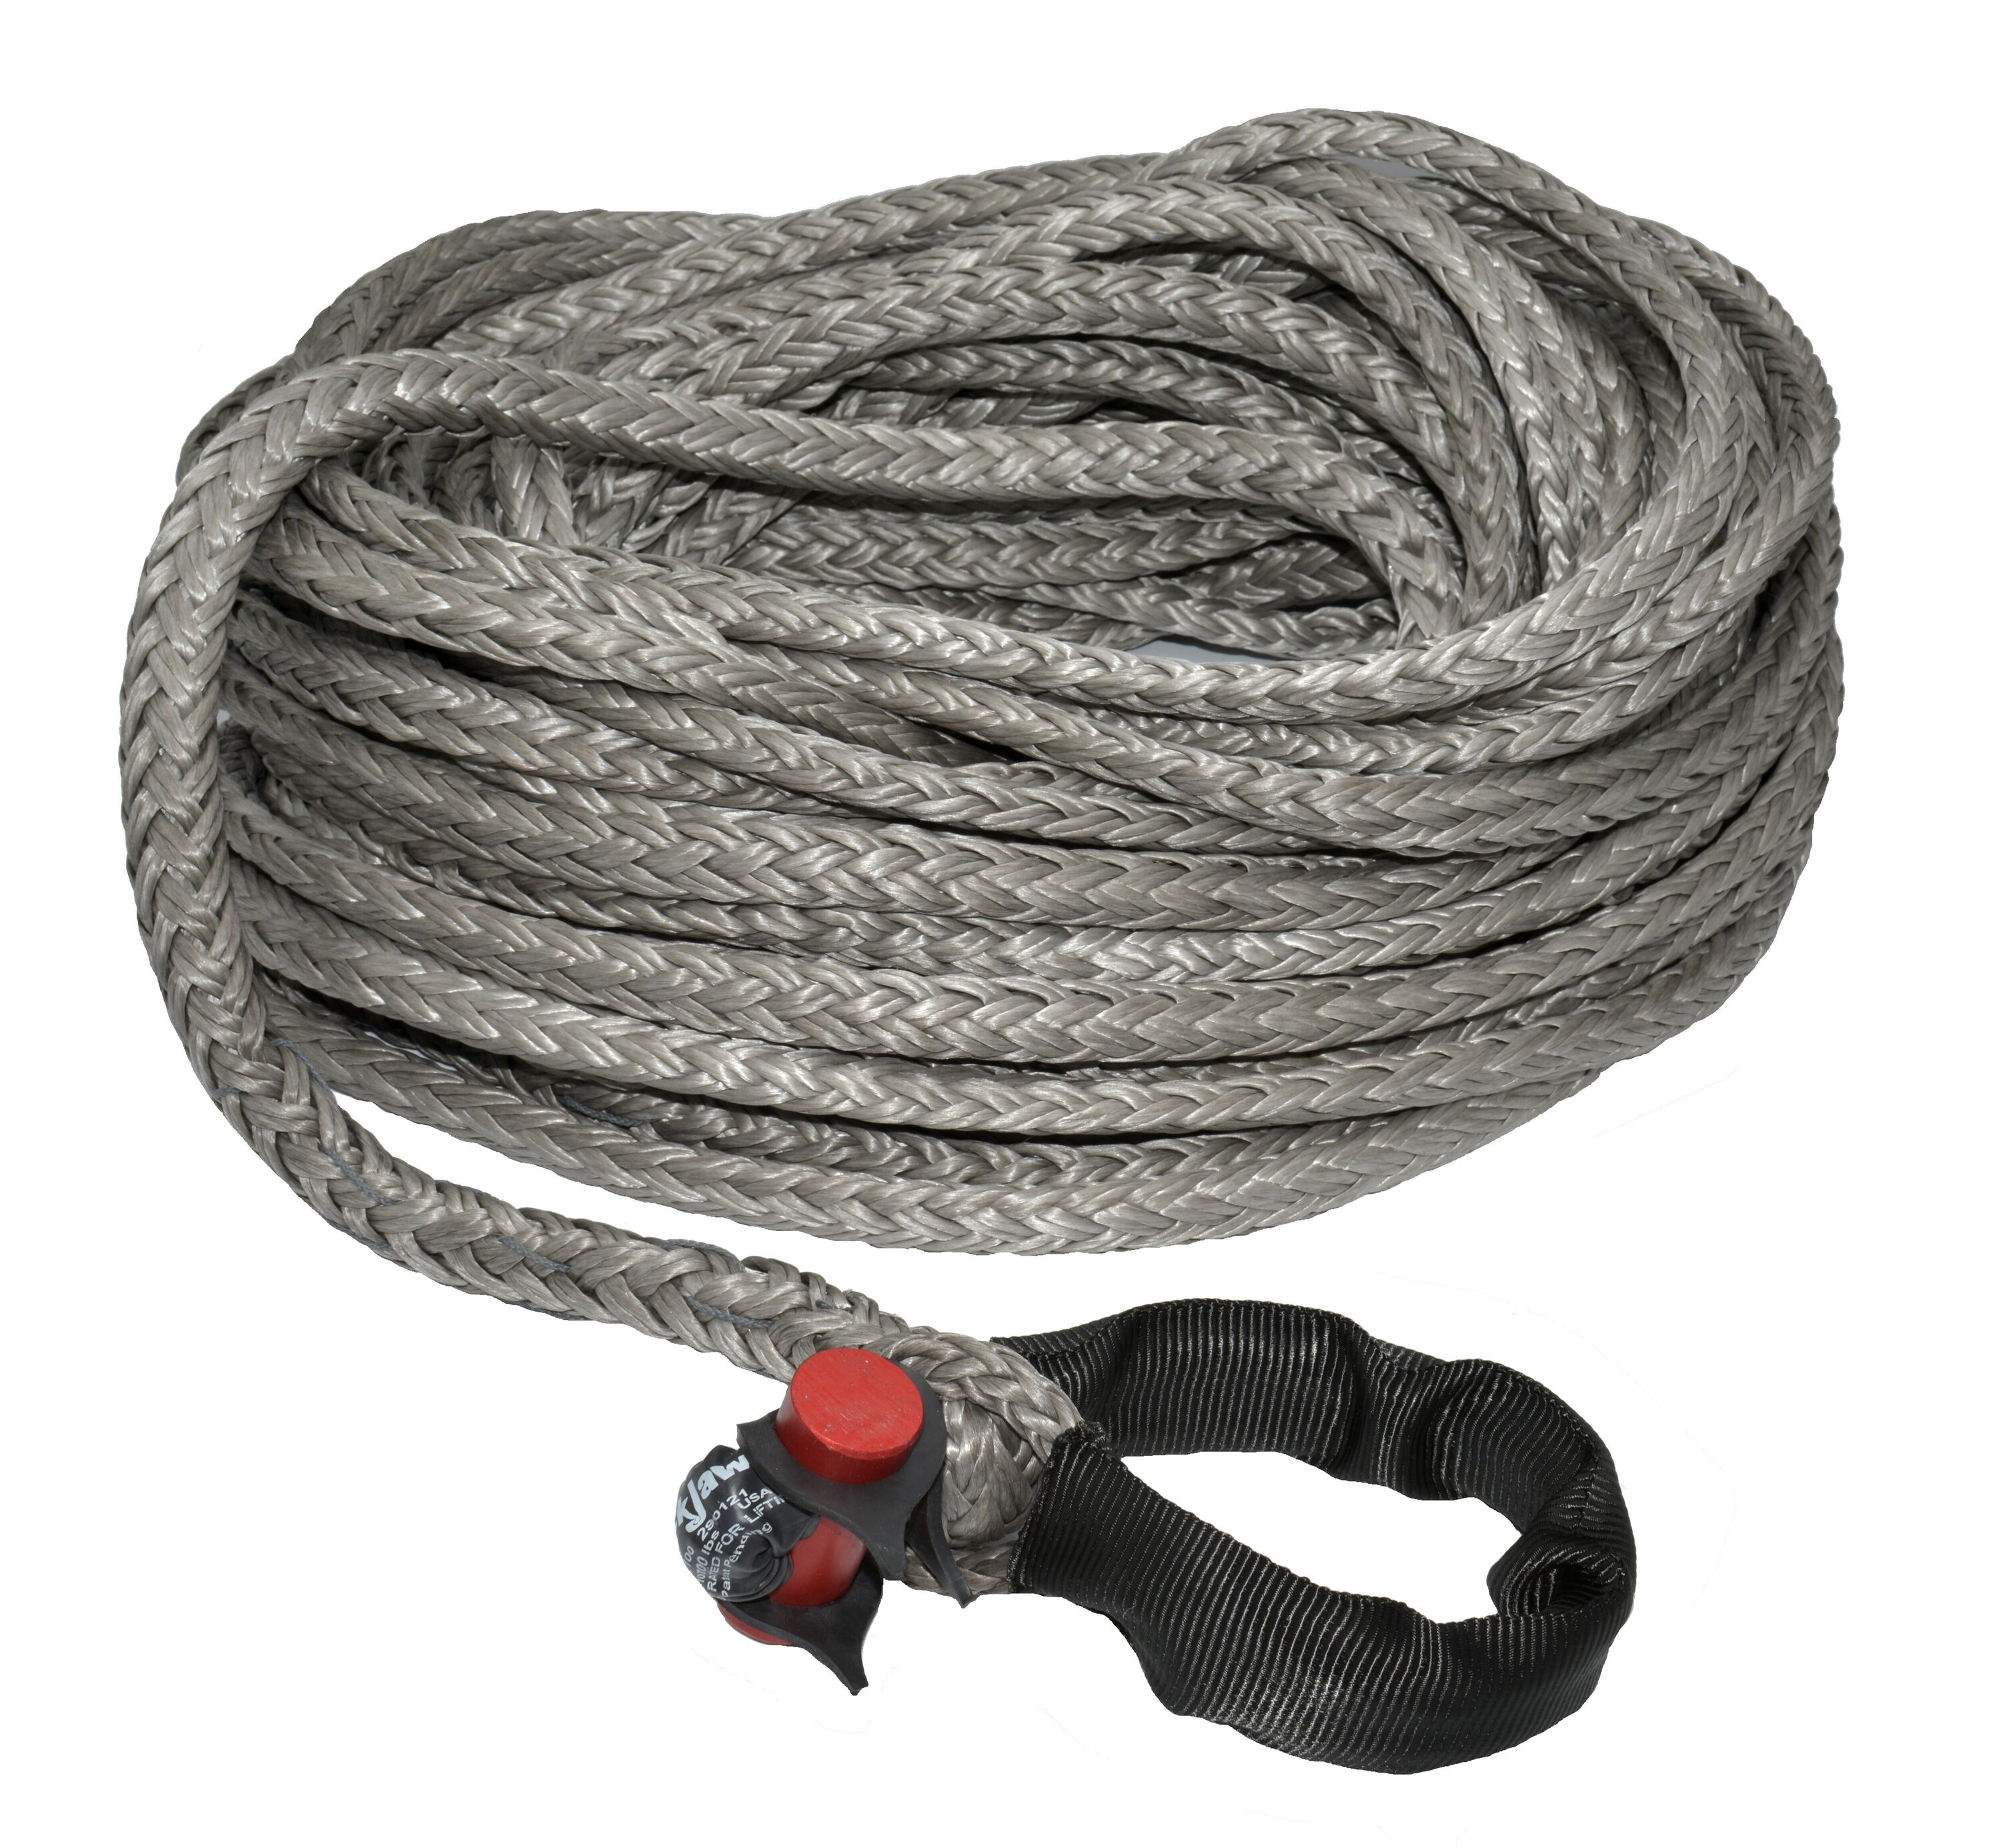 LockJaw 0.5-in Diameter Winch Rope - 10,700 lb. Safe Working Load